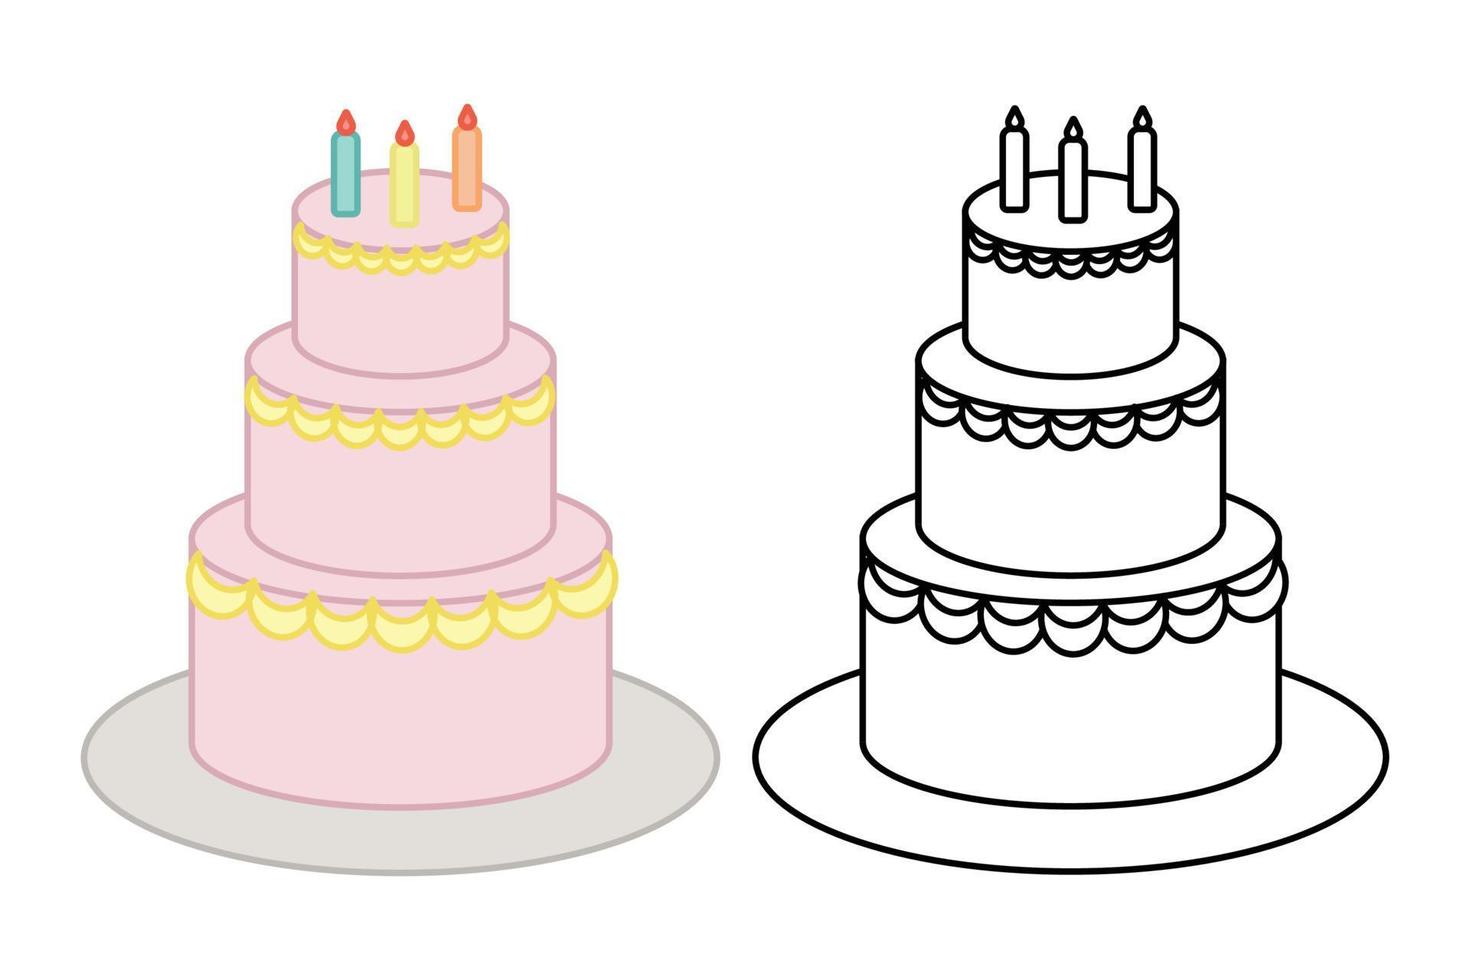 kleur verjaardag taart met kaarsen versierd vlak vector